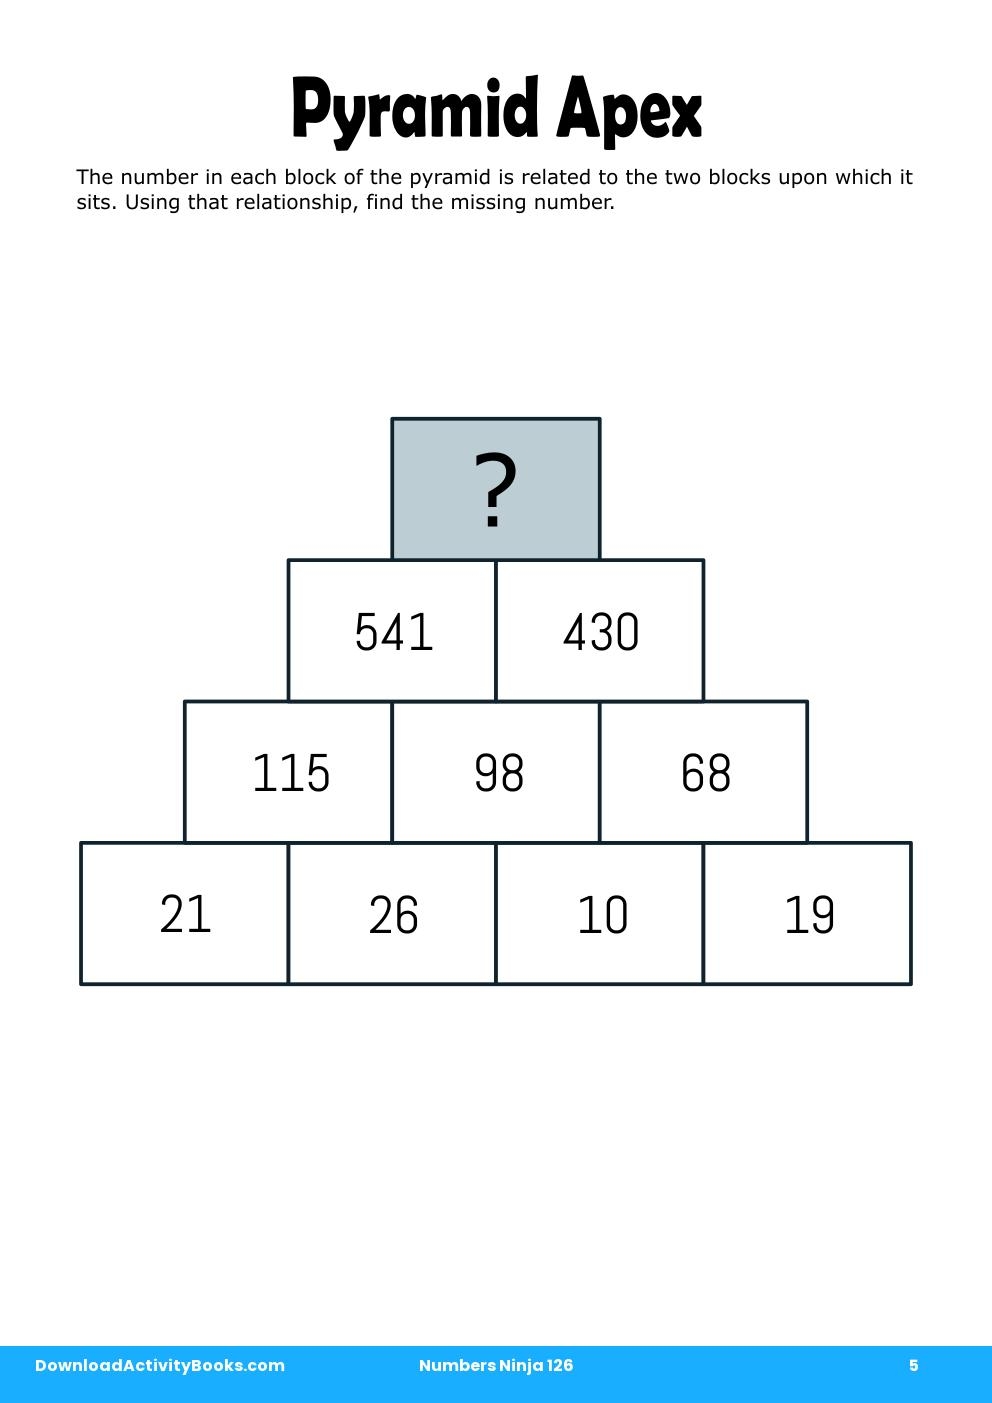 Pyramid Apex in Numbers Ninja 126